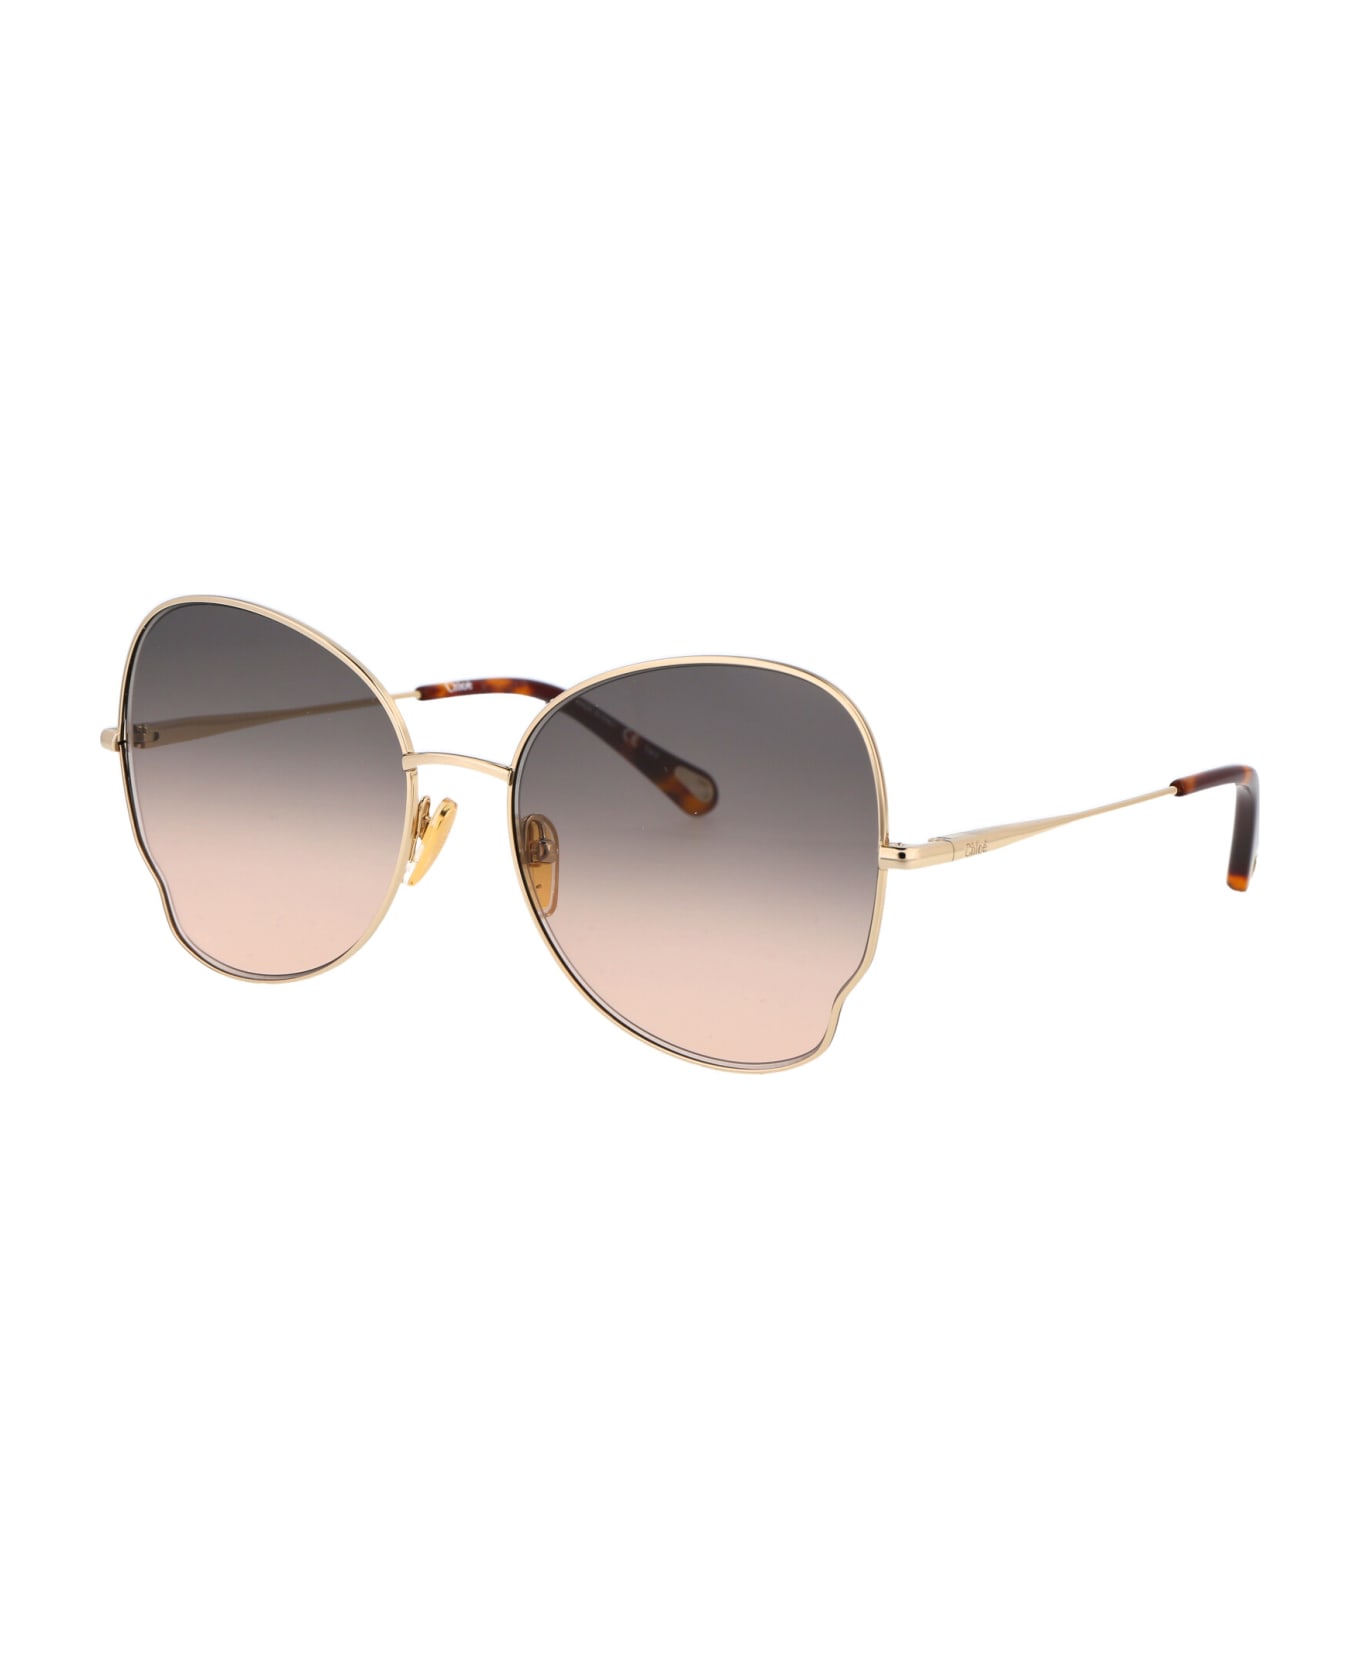 Chloé Eyewear Ch0094s Sunglasses - 001 GOLD GOLD BROWN